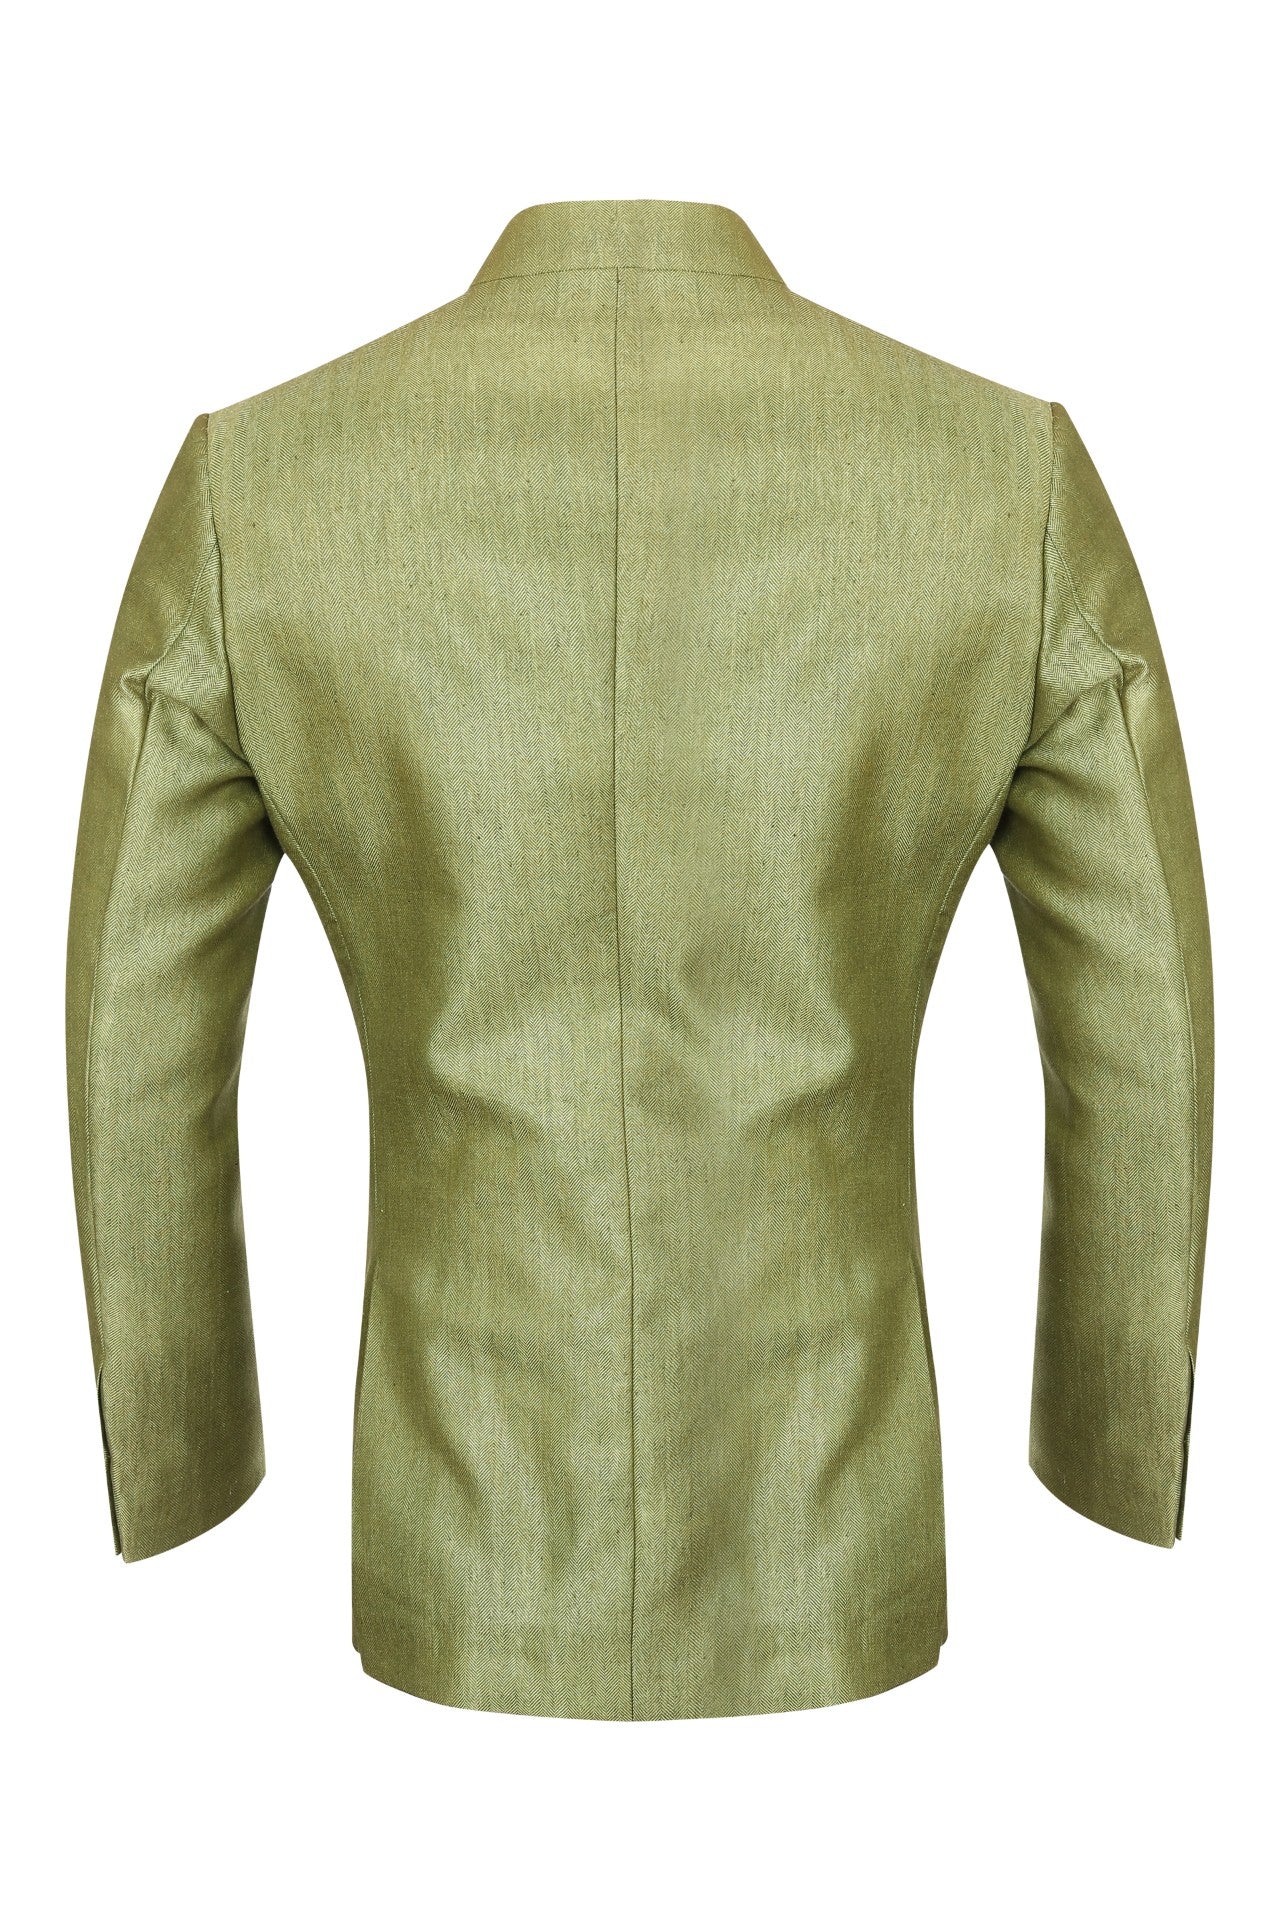 Green Bandhgala in Herringbone Matka Silk Fabric